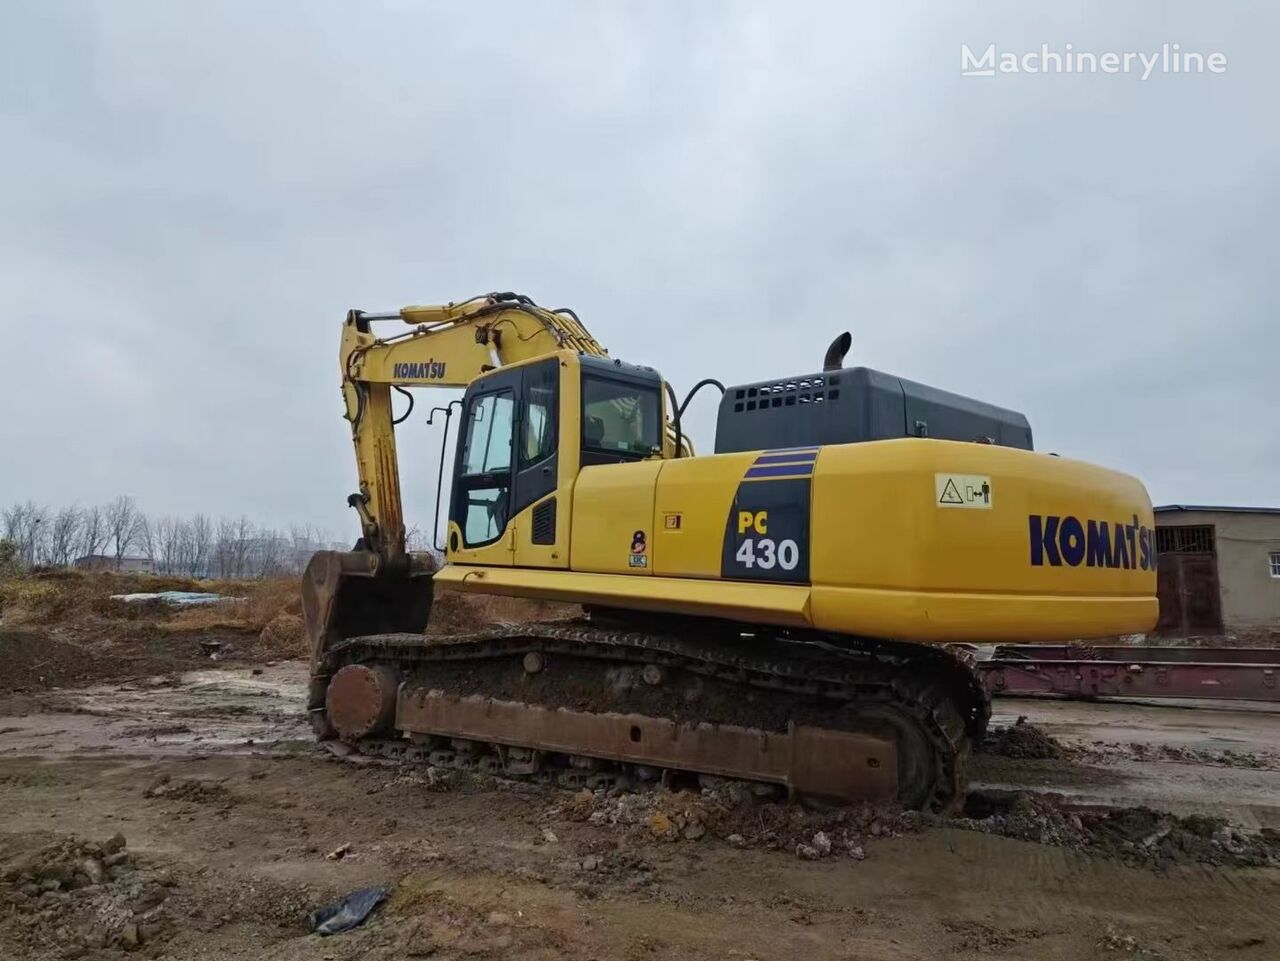 Komatsu PC430 tracked excavator